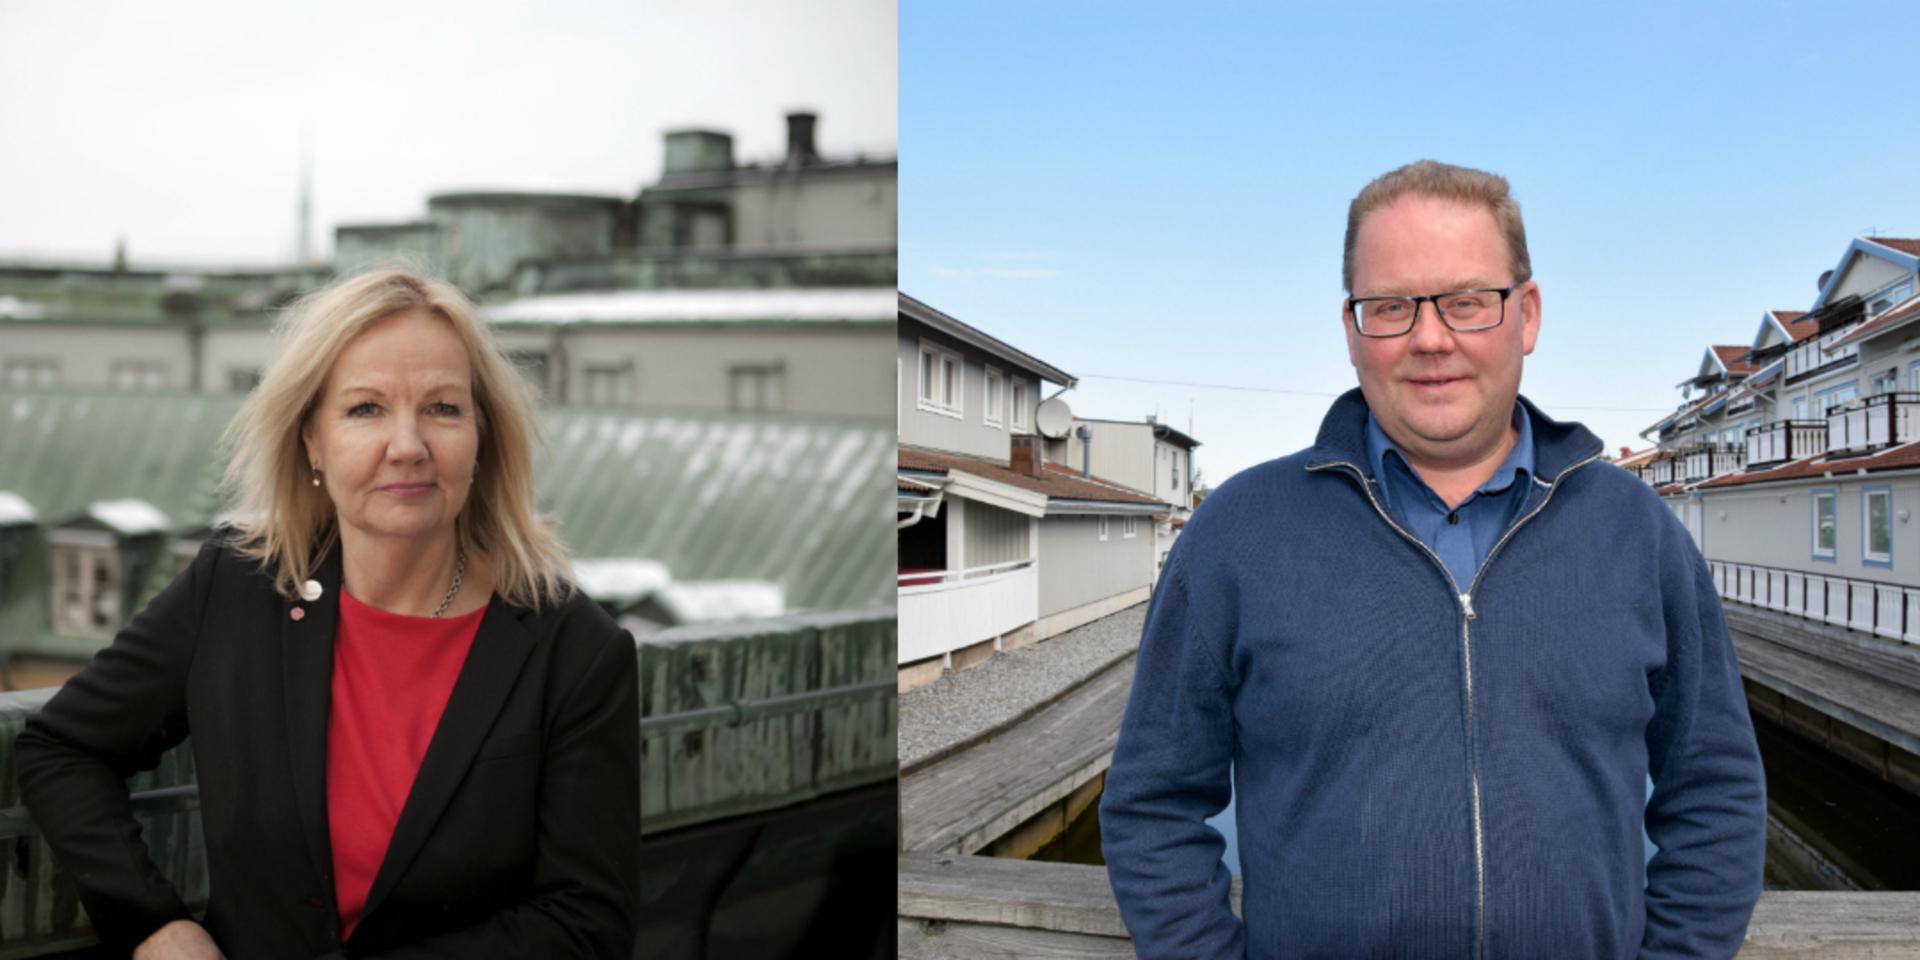 Catharina Bråkenhielm (S) blir nytt kommunalråd och Lars Larson (C) blir nytt oppositionsråd i Orust kommun fram till 2022.